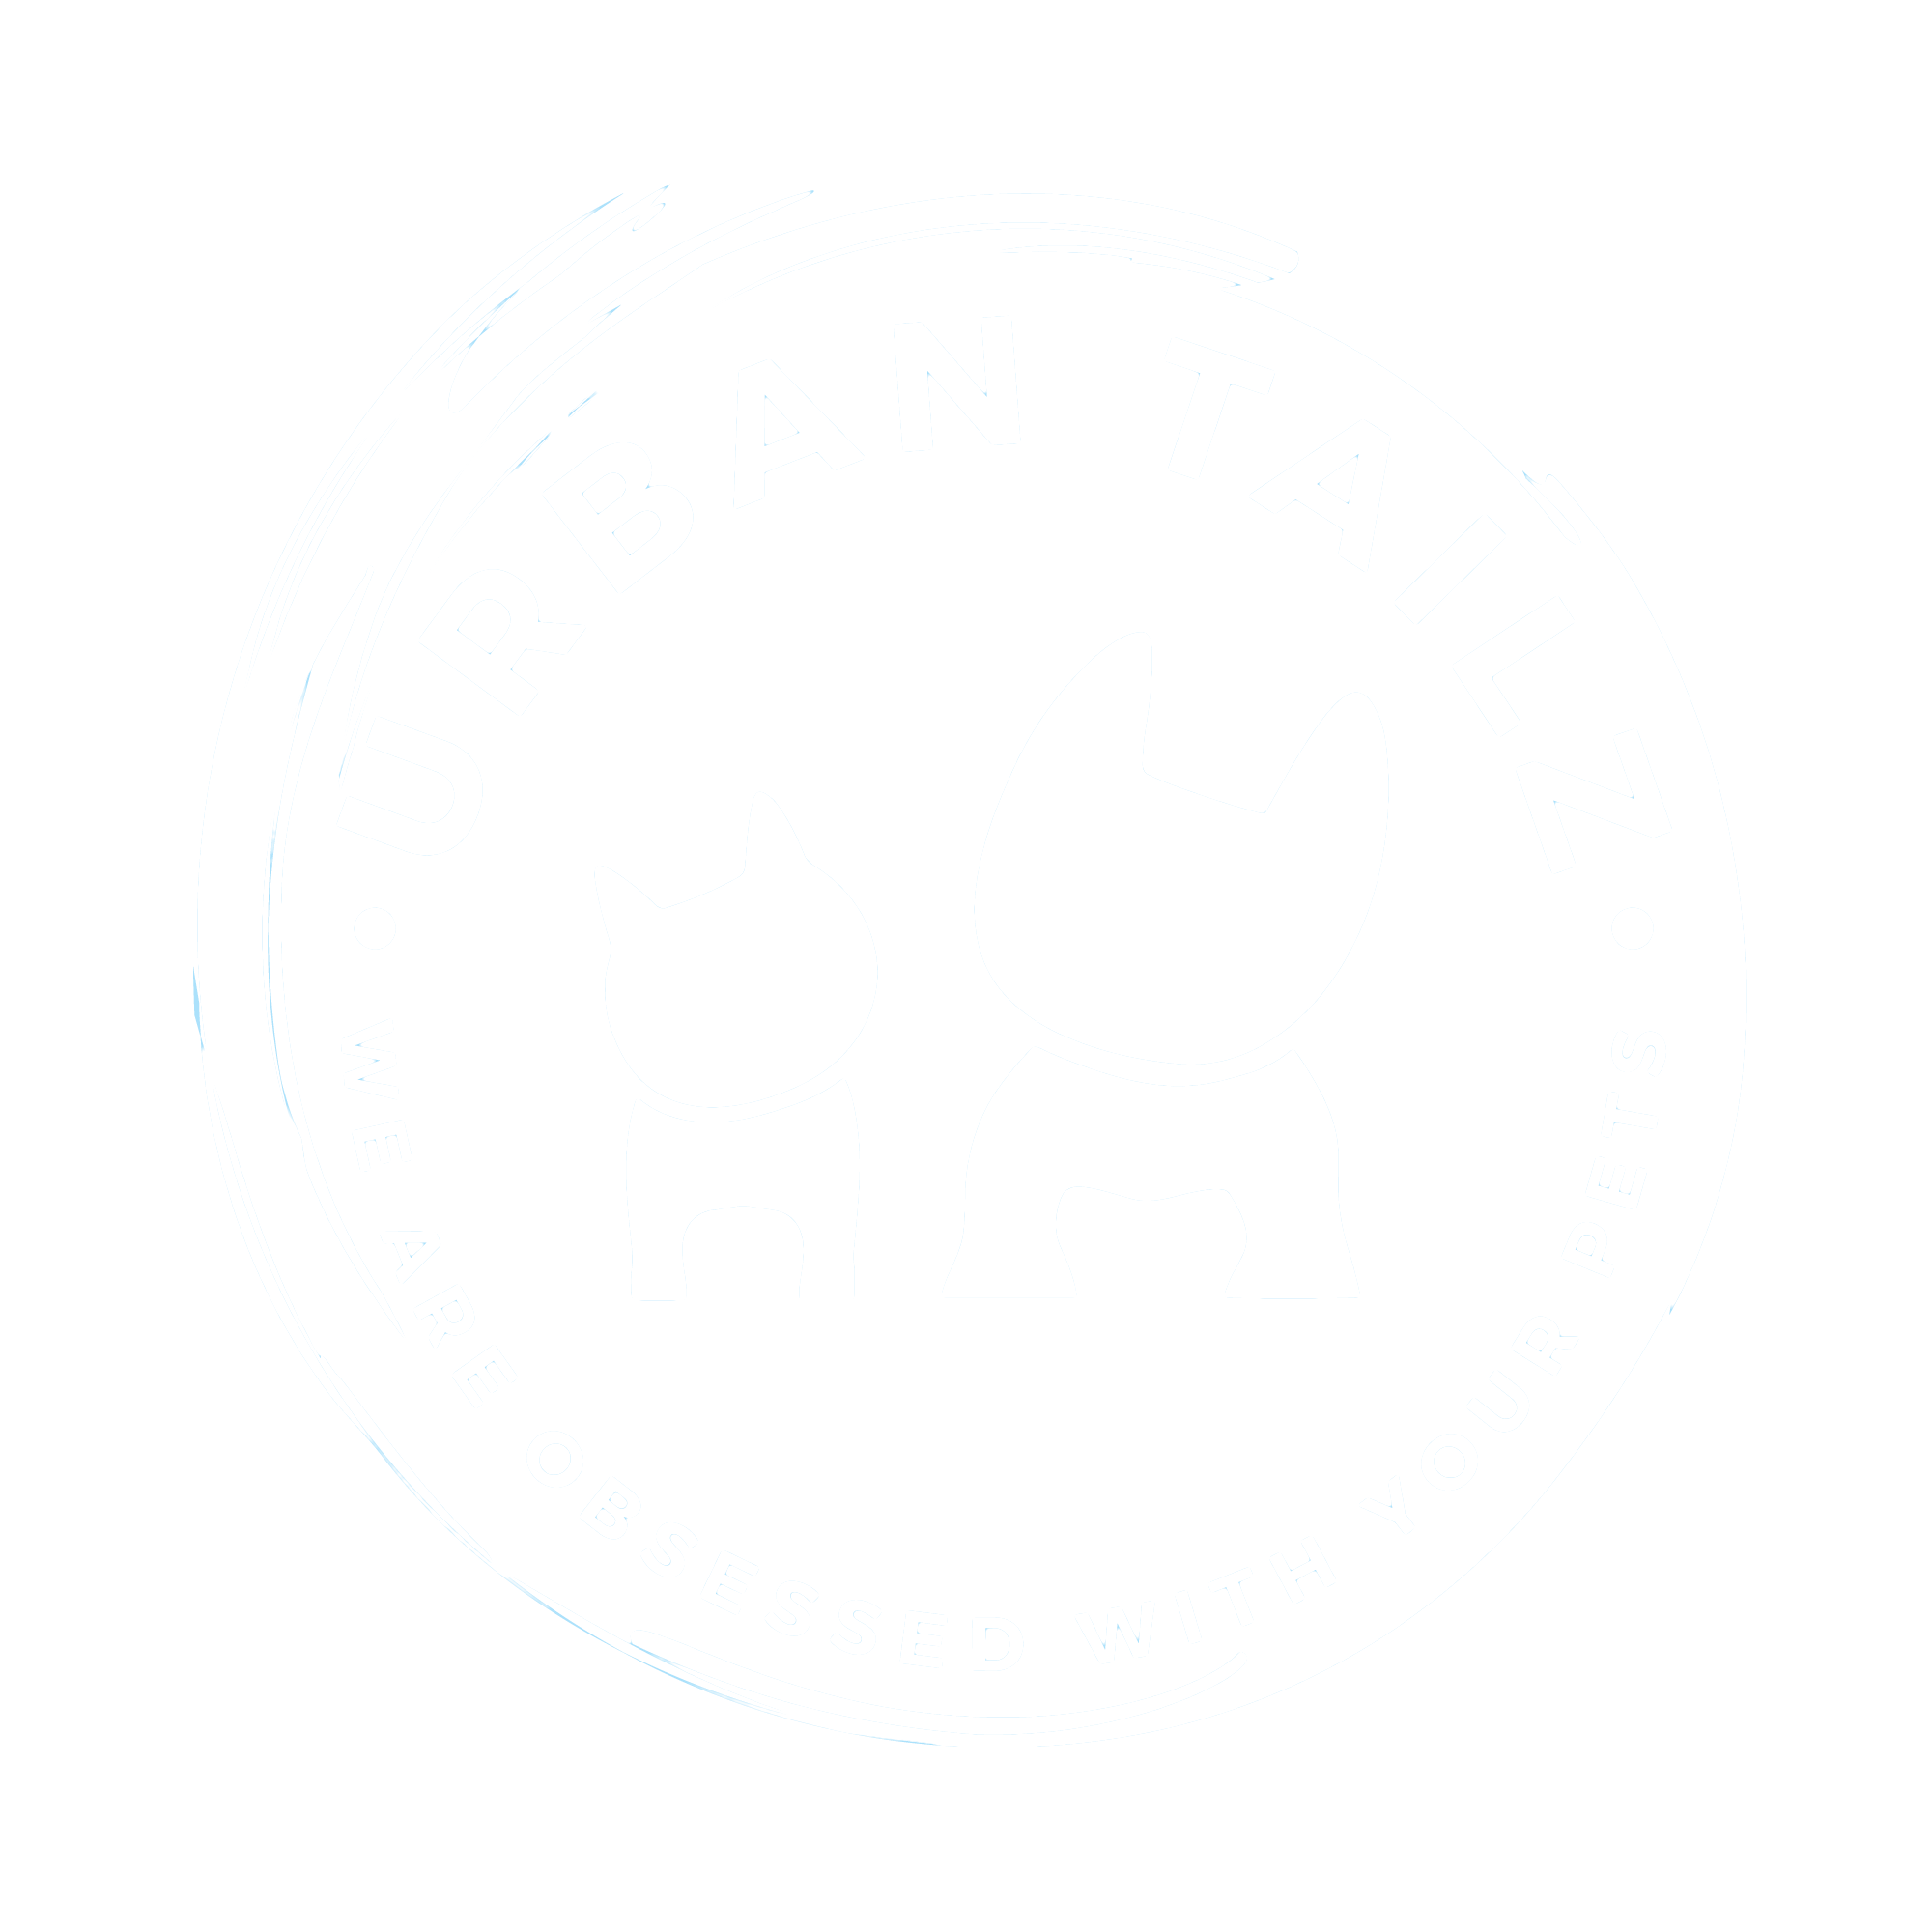 Urban Tailz Logo